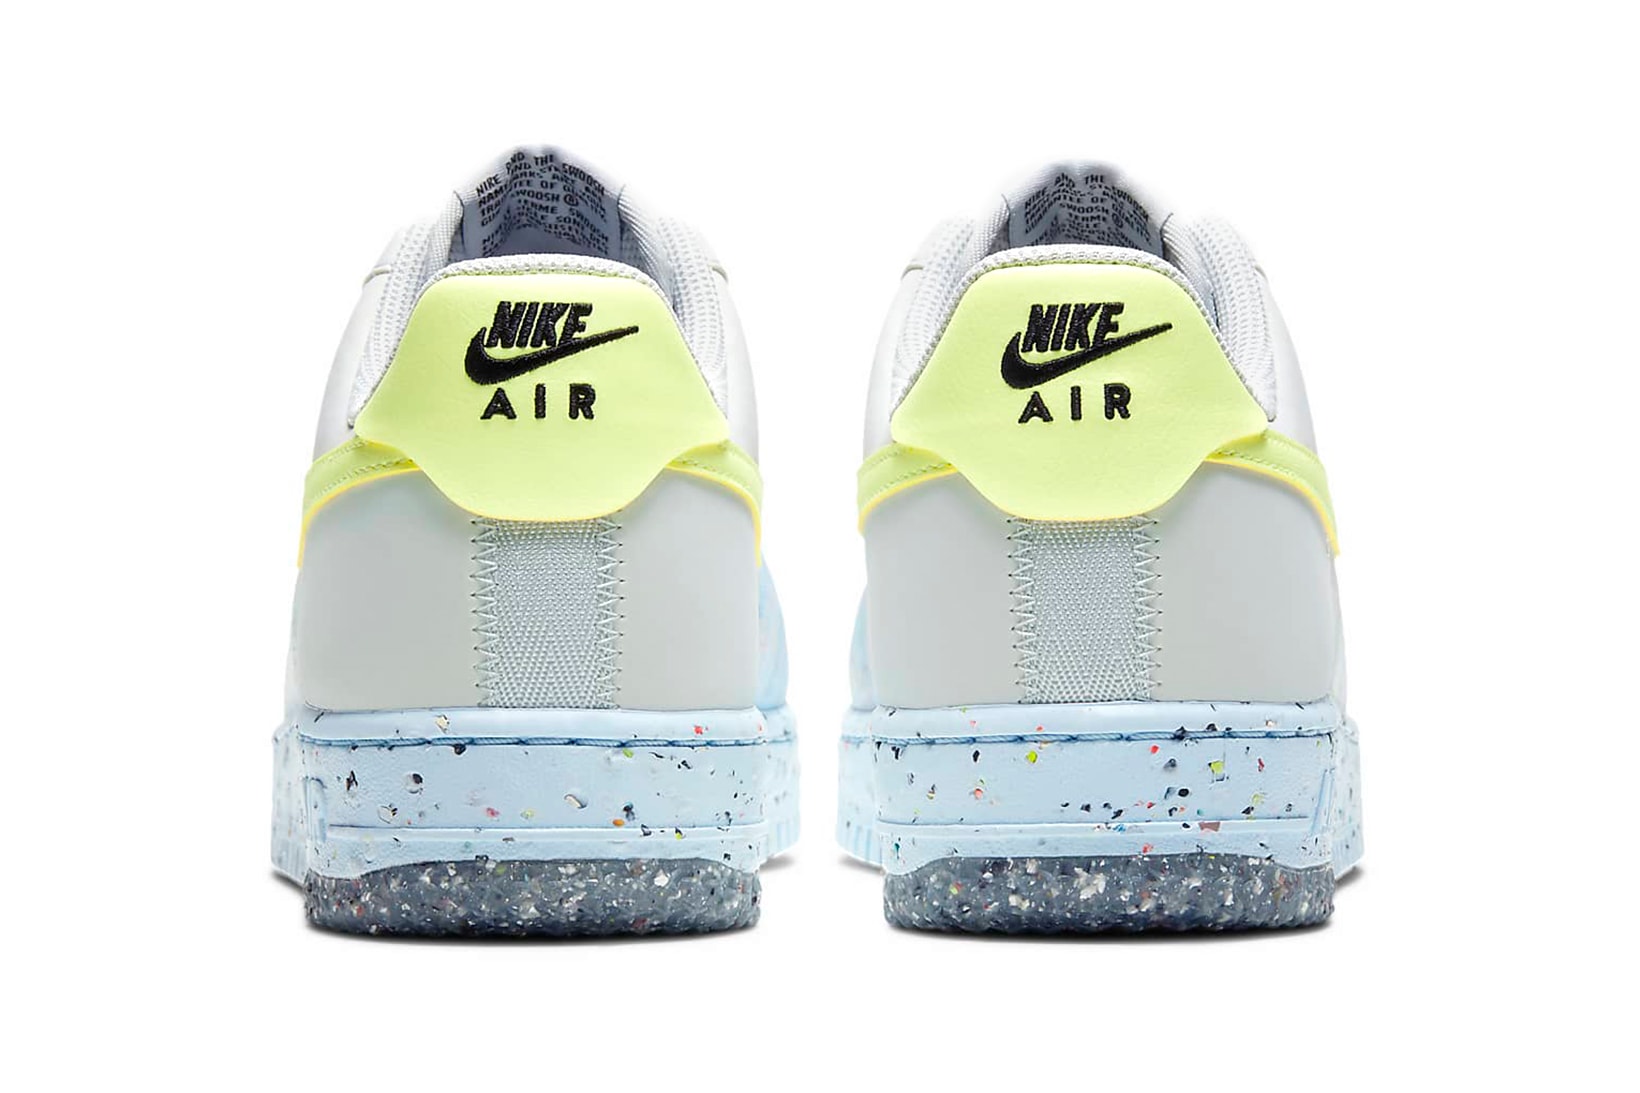 nike air force 1 crater womens sneakers neon green pastel blue gray colorway shoes footwear sneakerhead